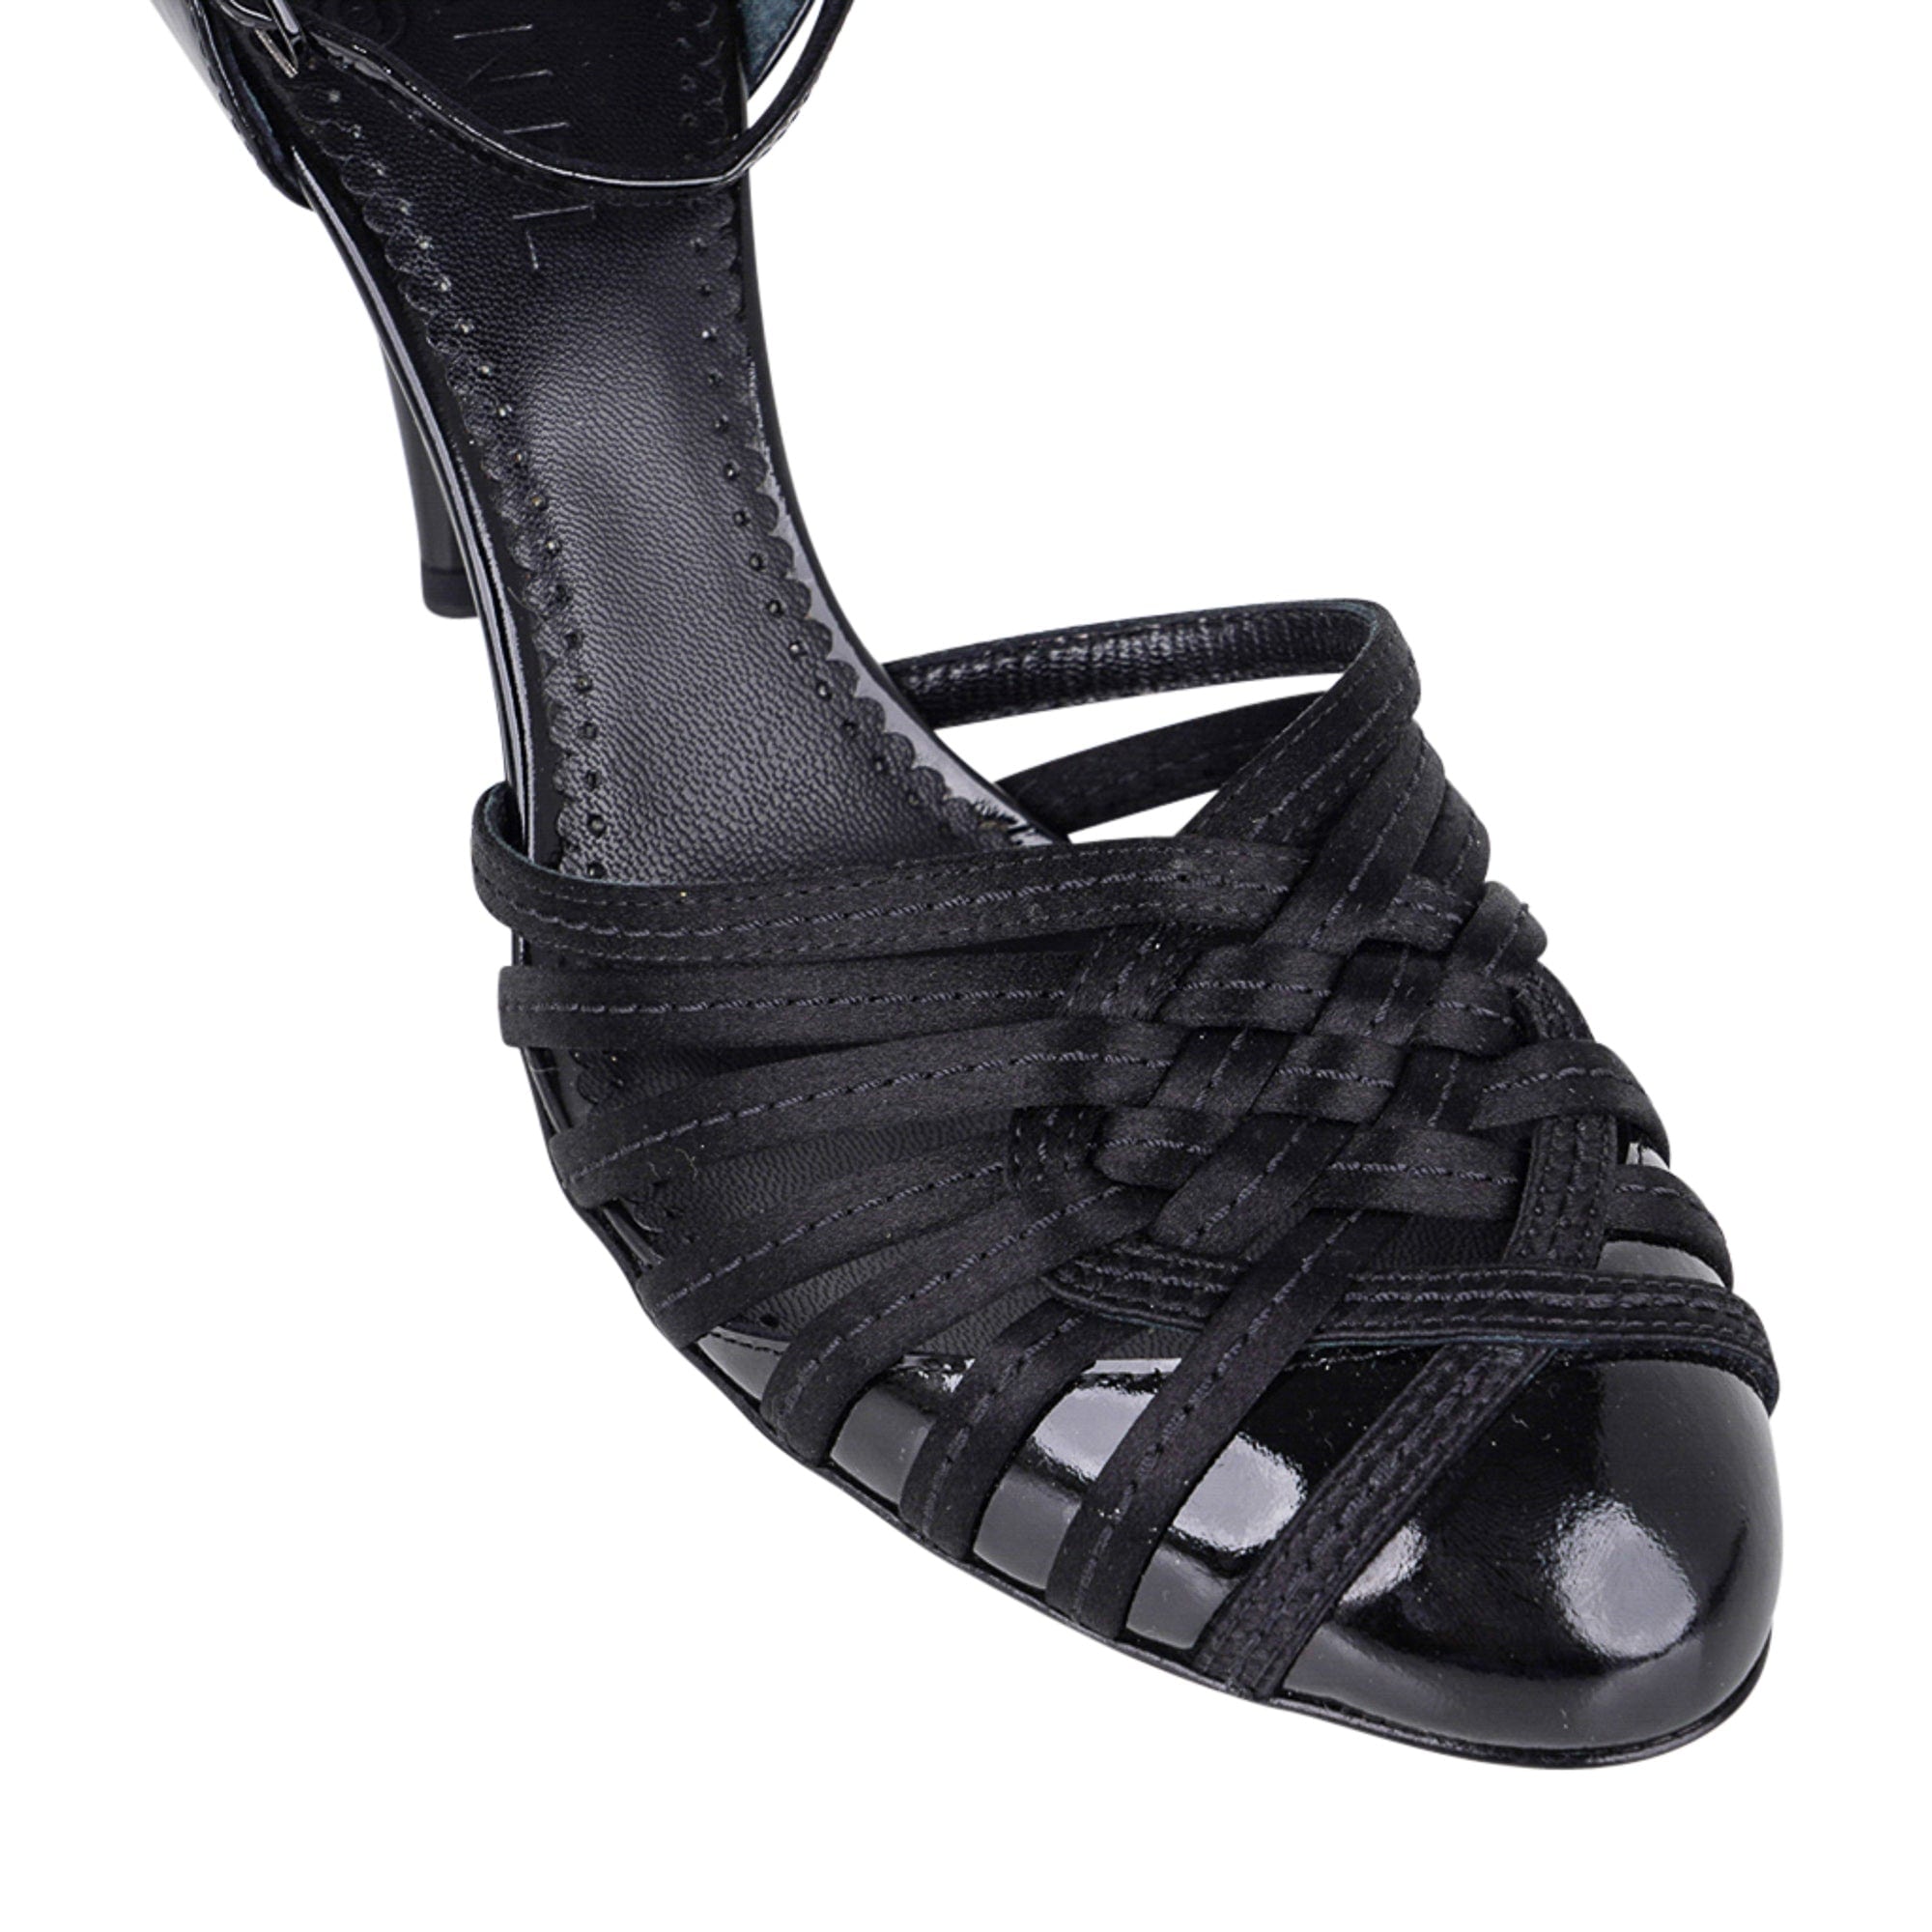 Chanel Shoe Black Patent Leather Satin Ankle Strap  38.5 / 8.5